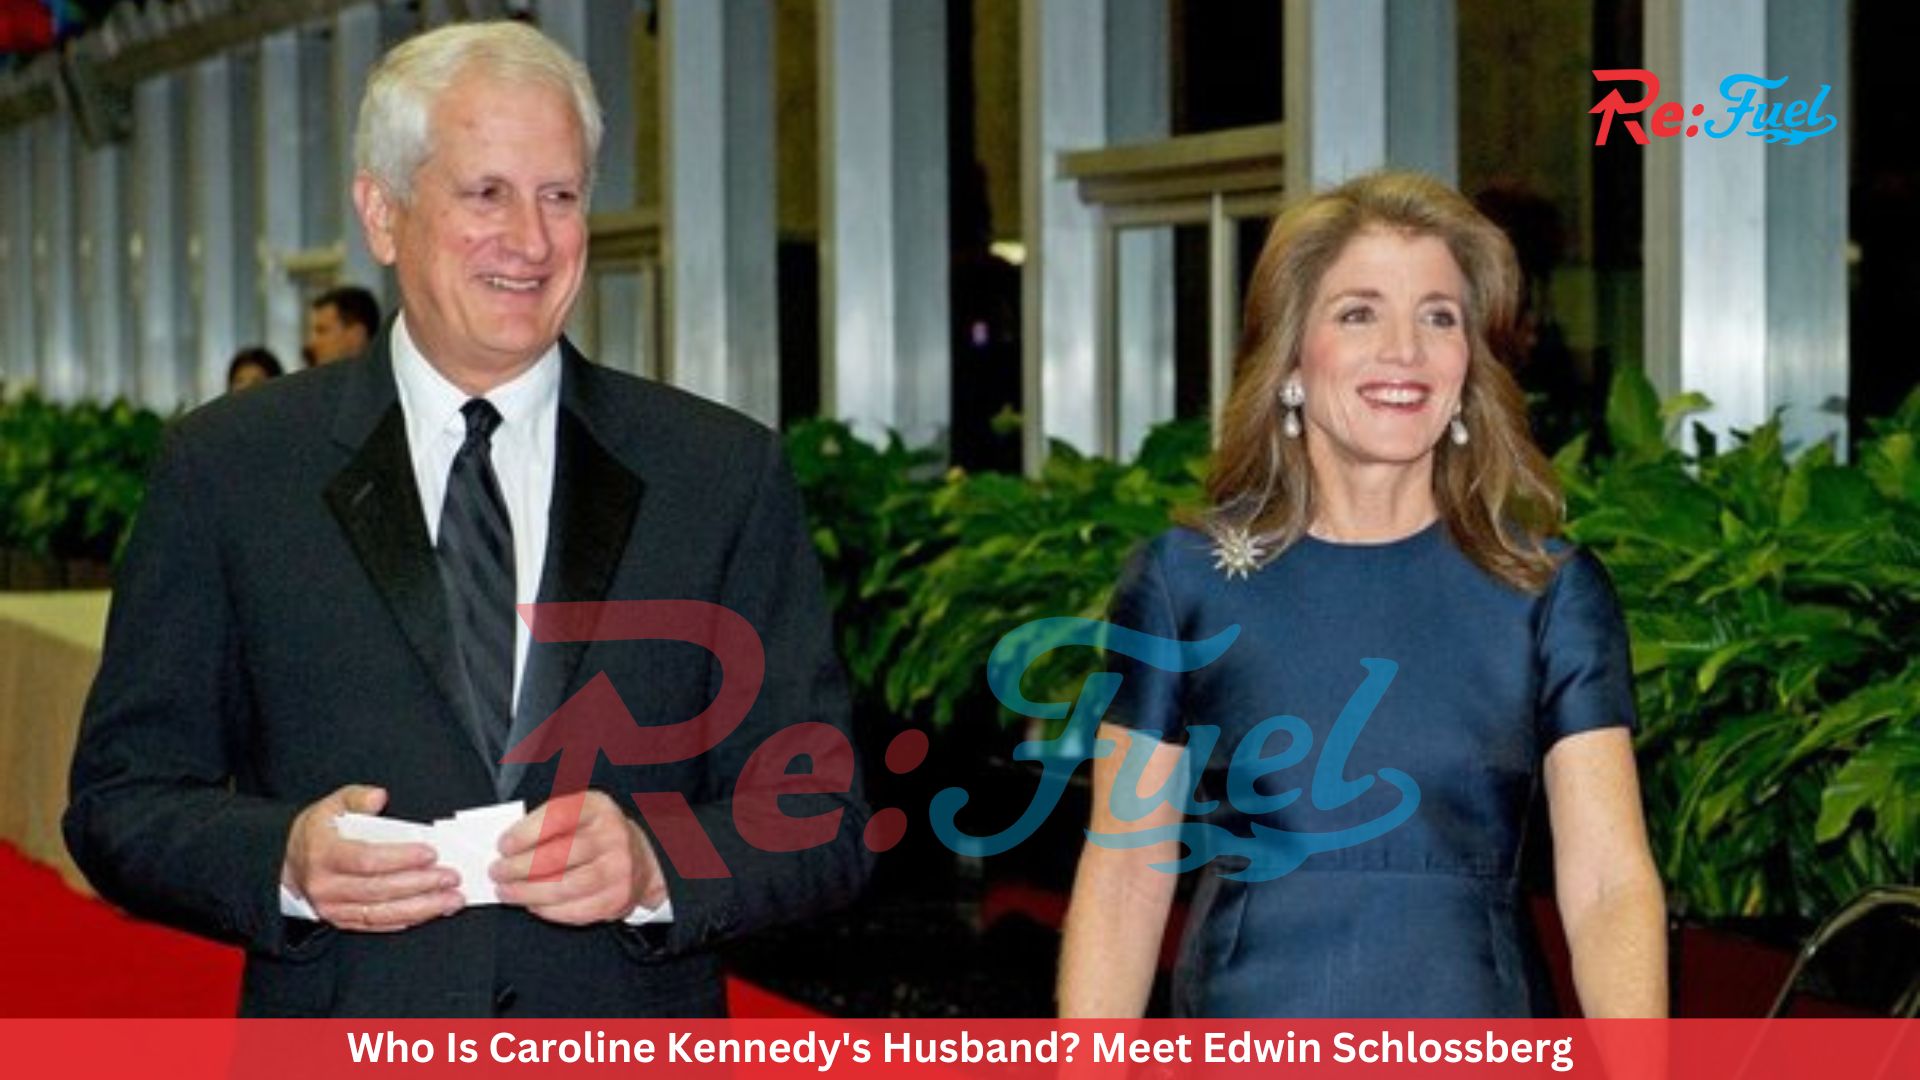 Who Is Caroline Kennedy's Husband? Meet Edwin Schlossberg